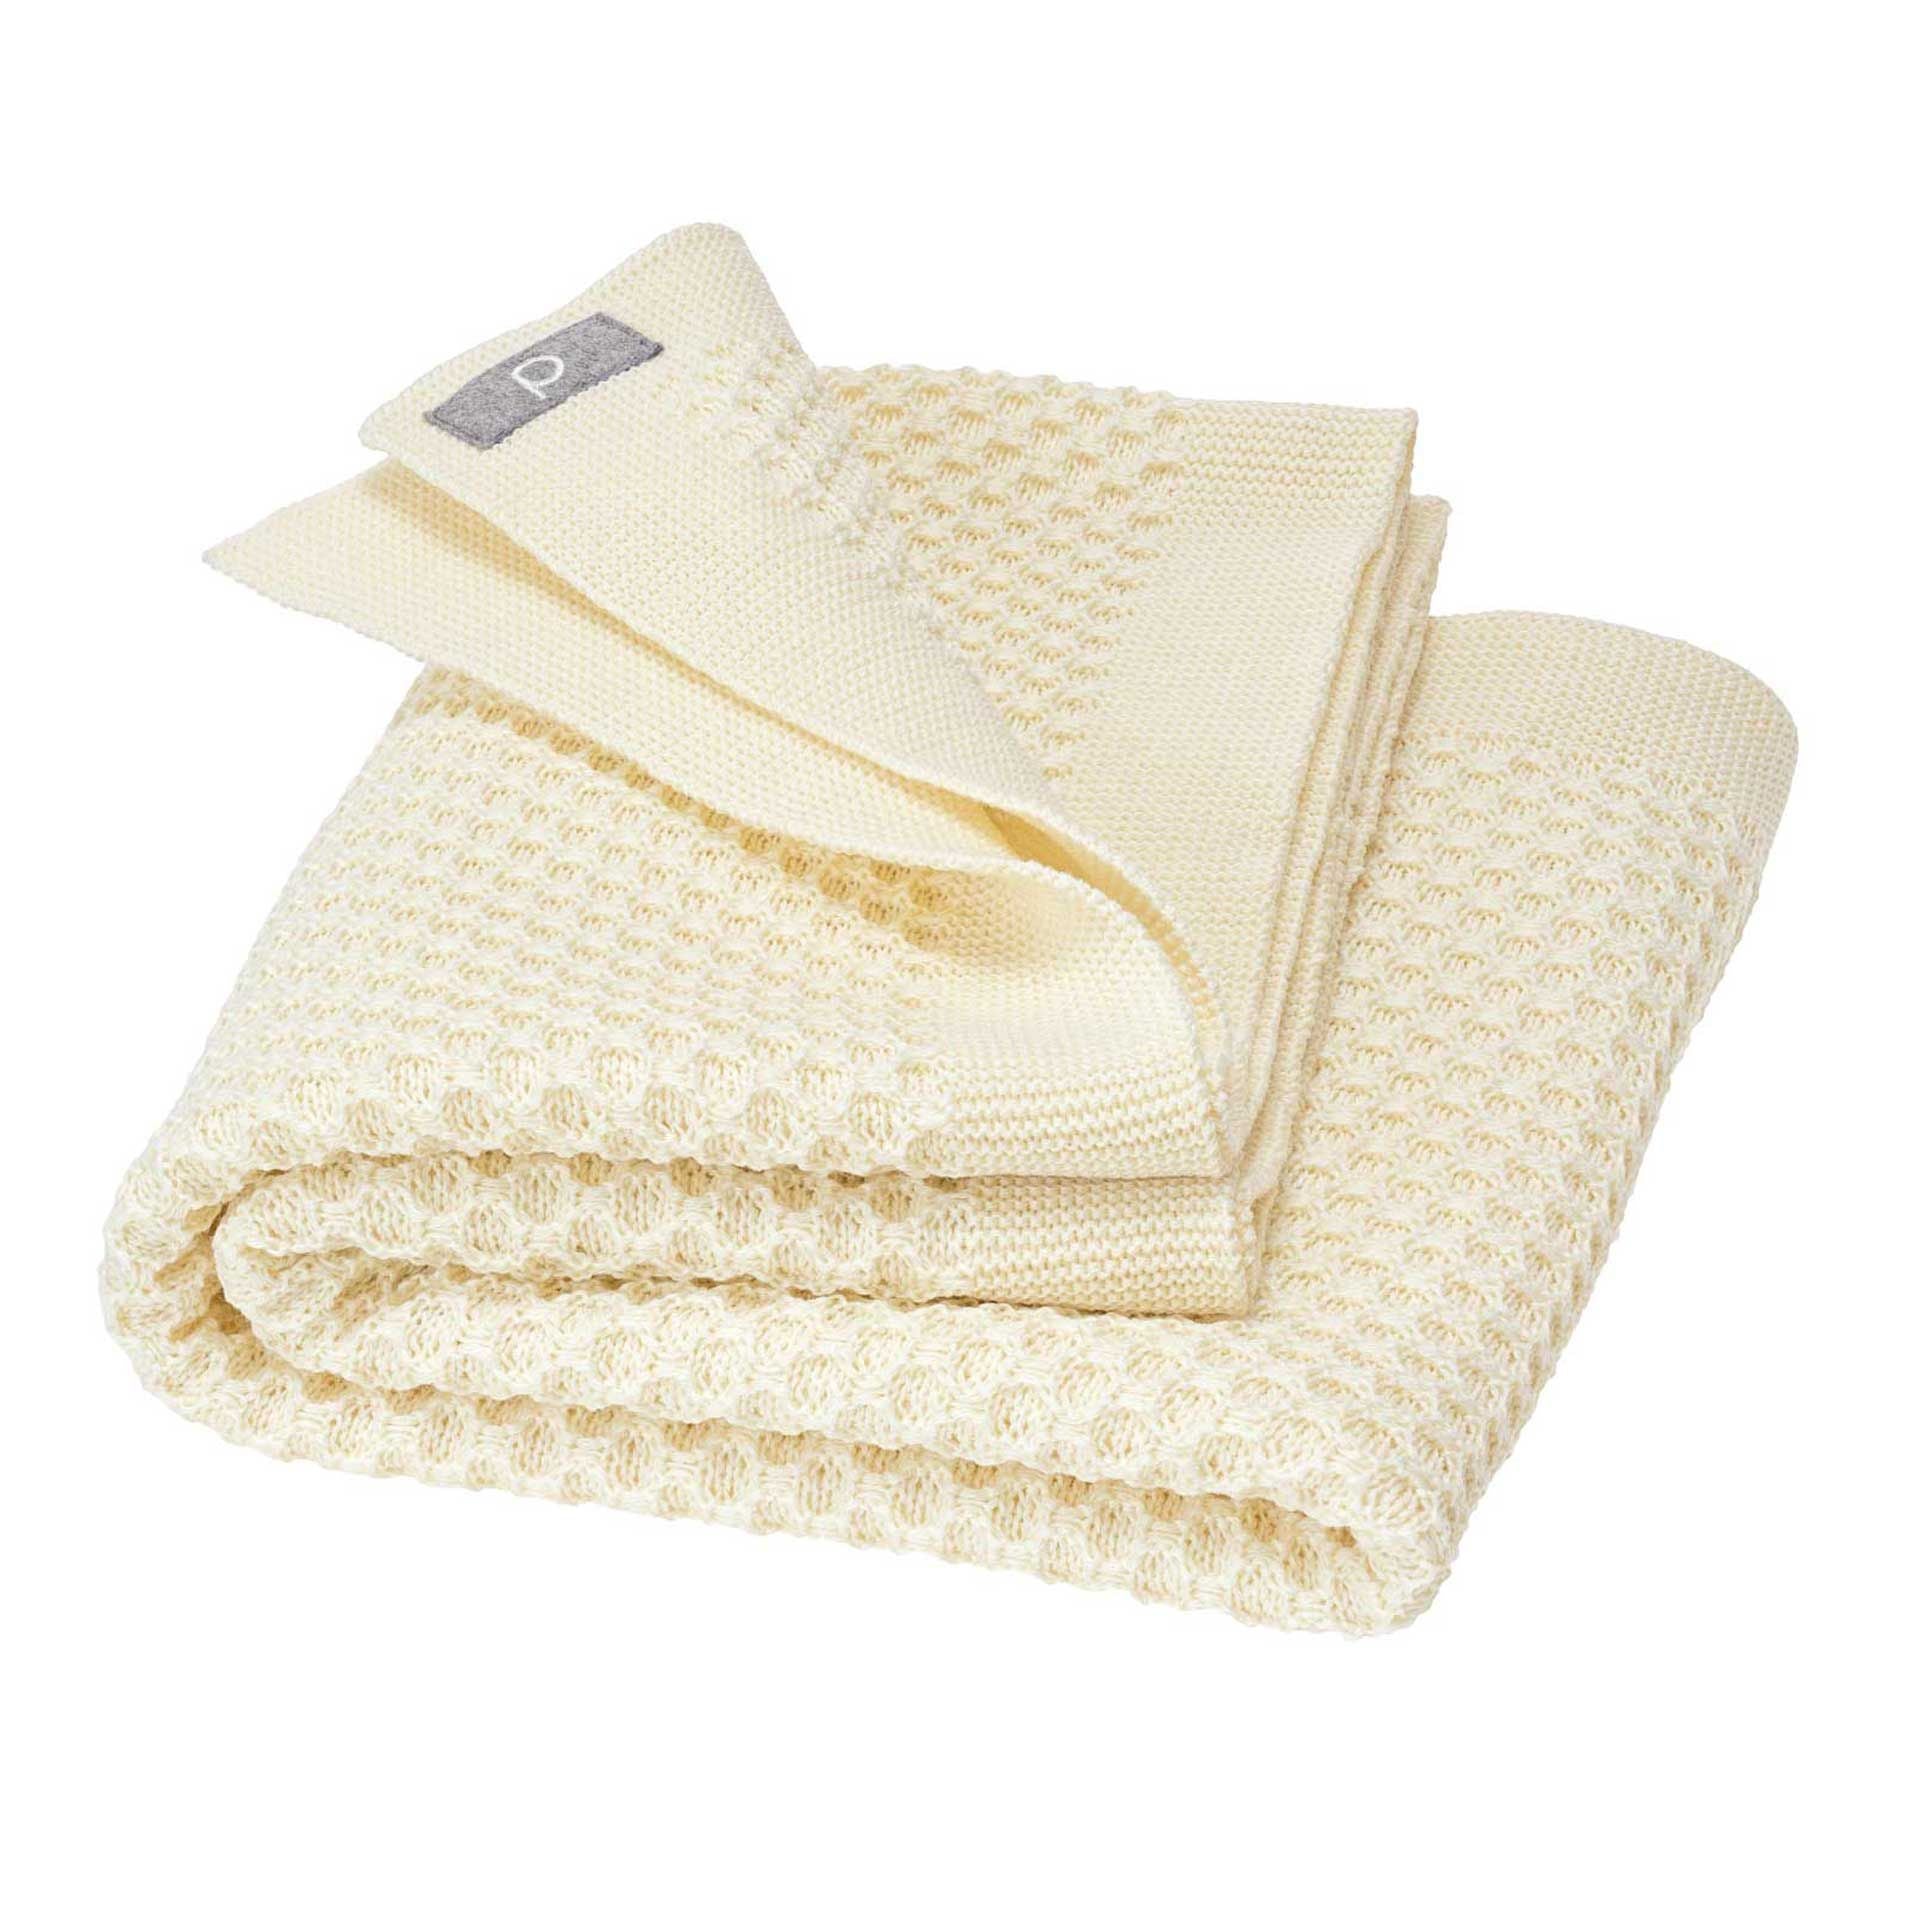 Disana&#39;s honeycomb blanket in natural. Made of 100% soft merino wool.